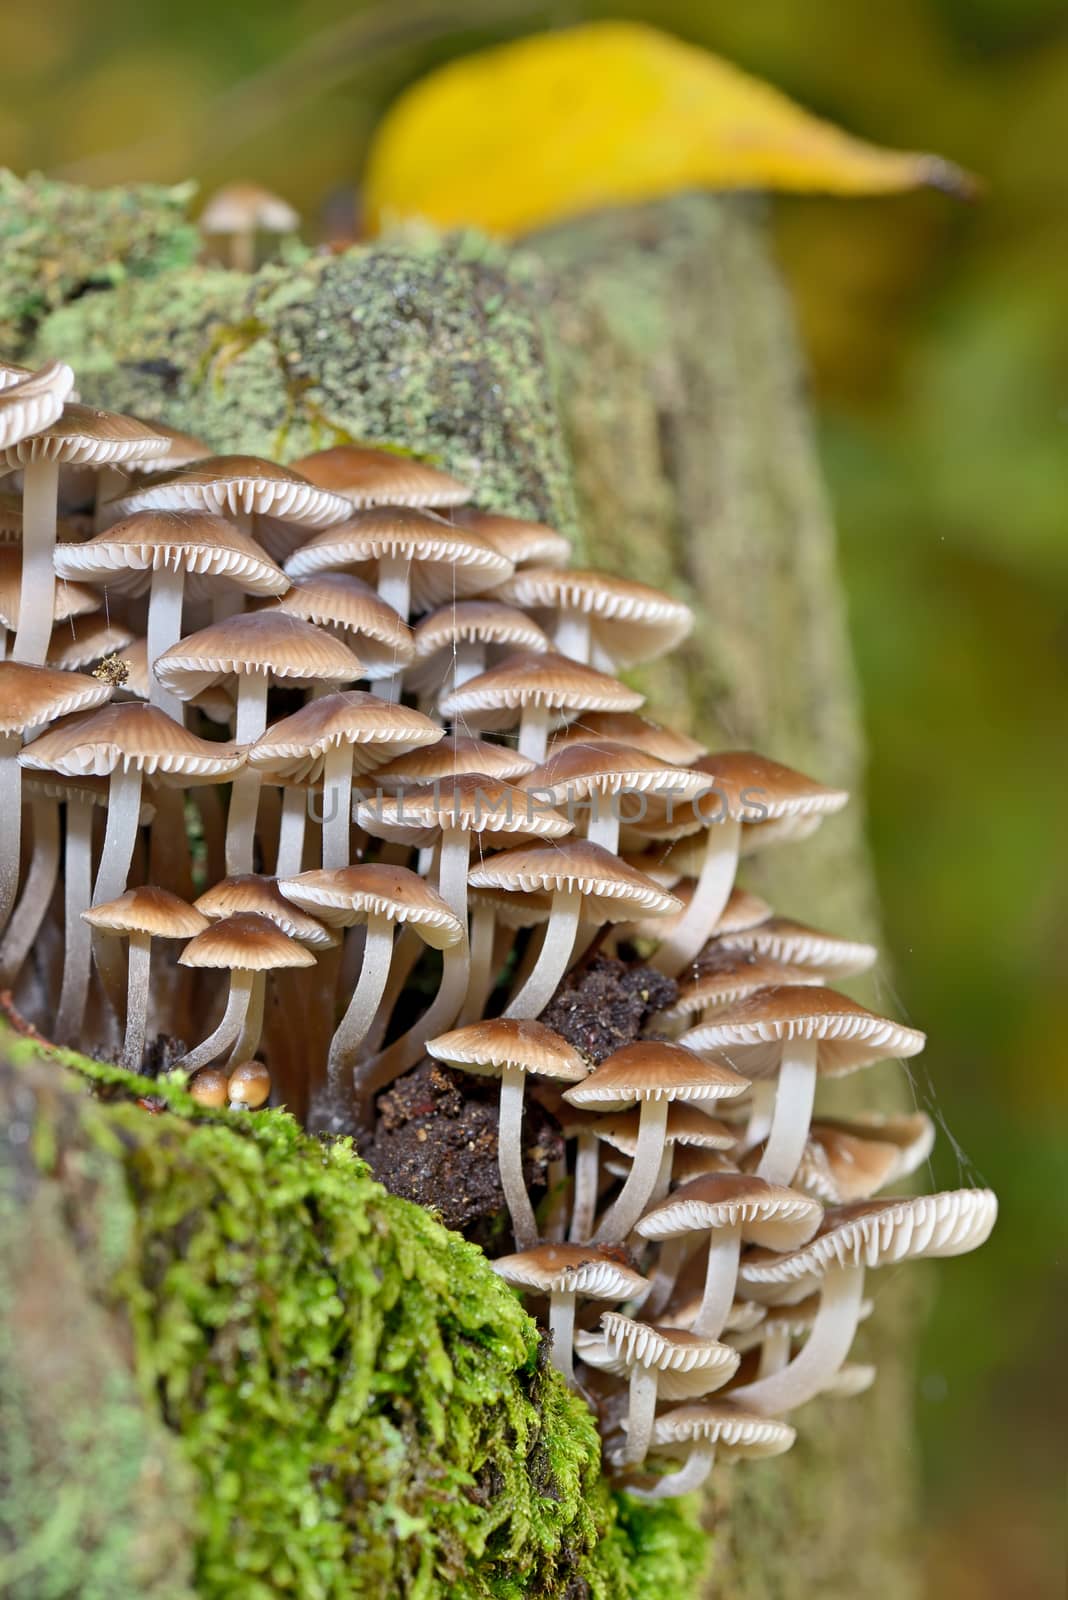 Forest mushroom by jordachelr